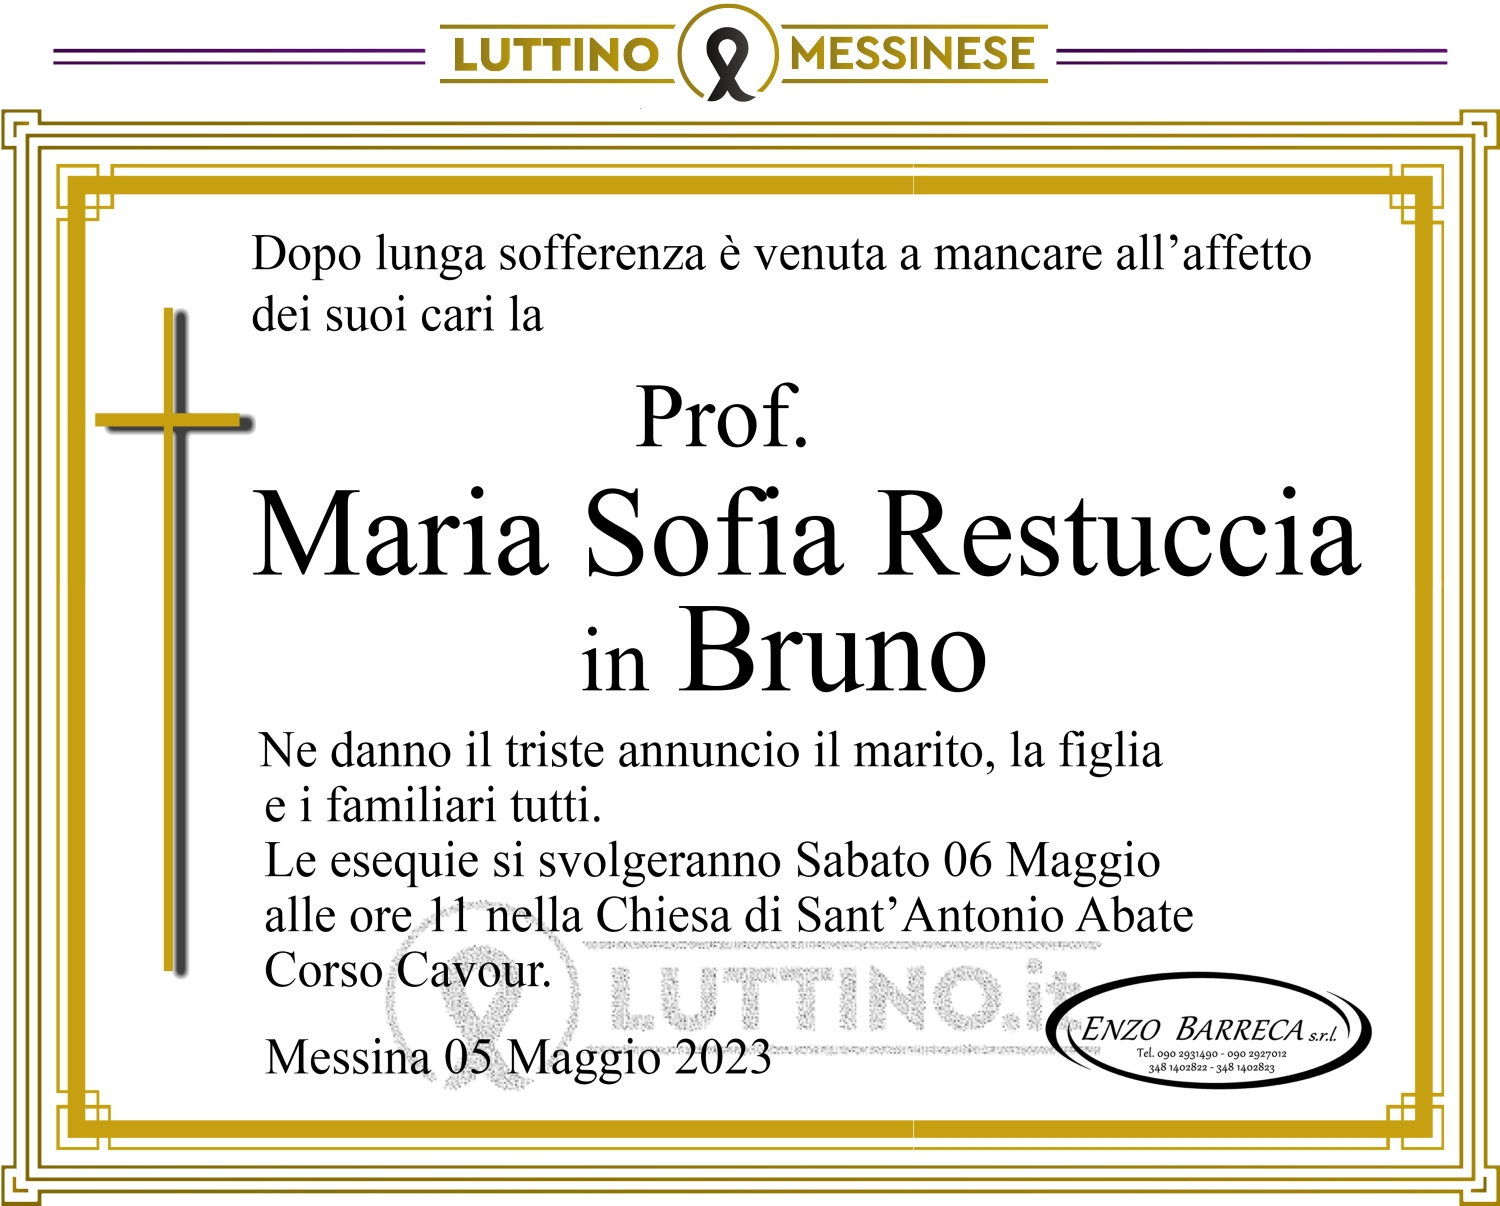 Maria Sofia Restuccia